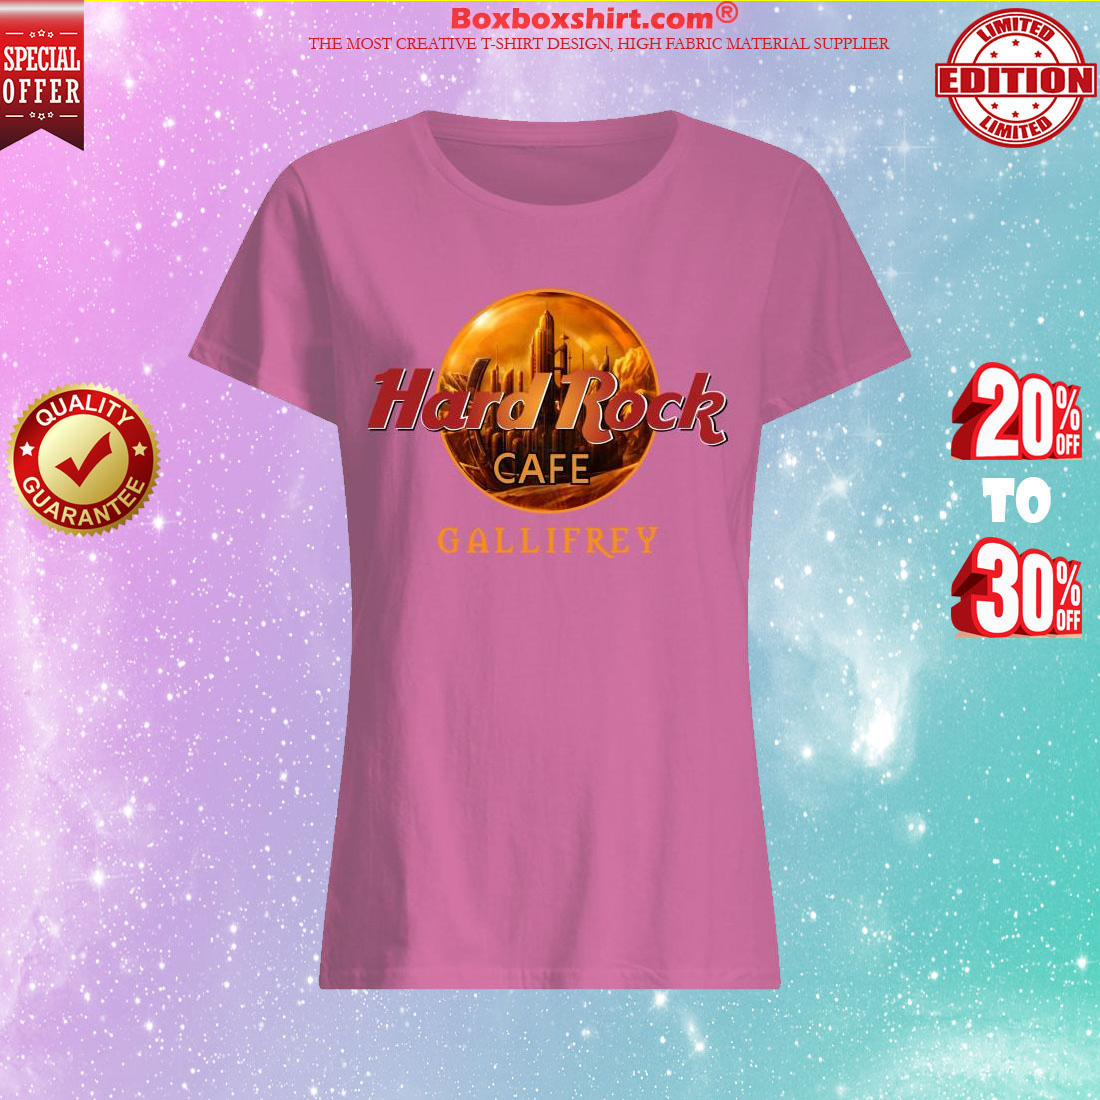 Hard rock cafe Gallifrey classic shirt